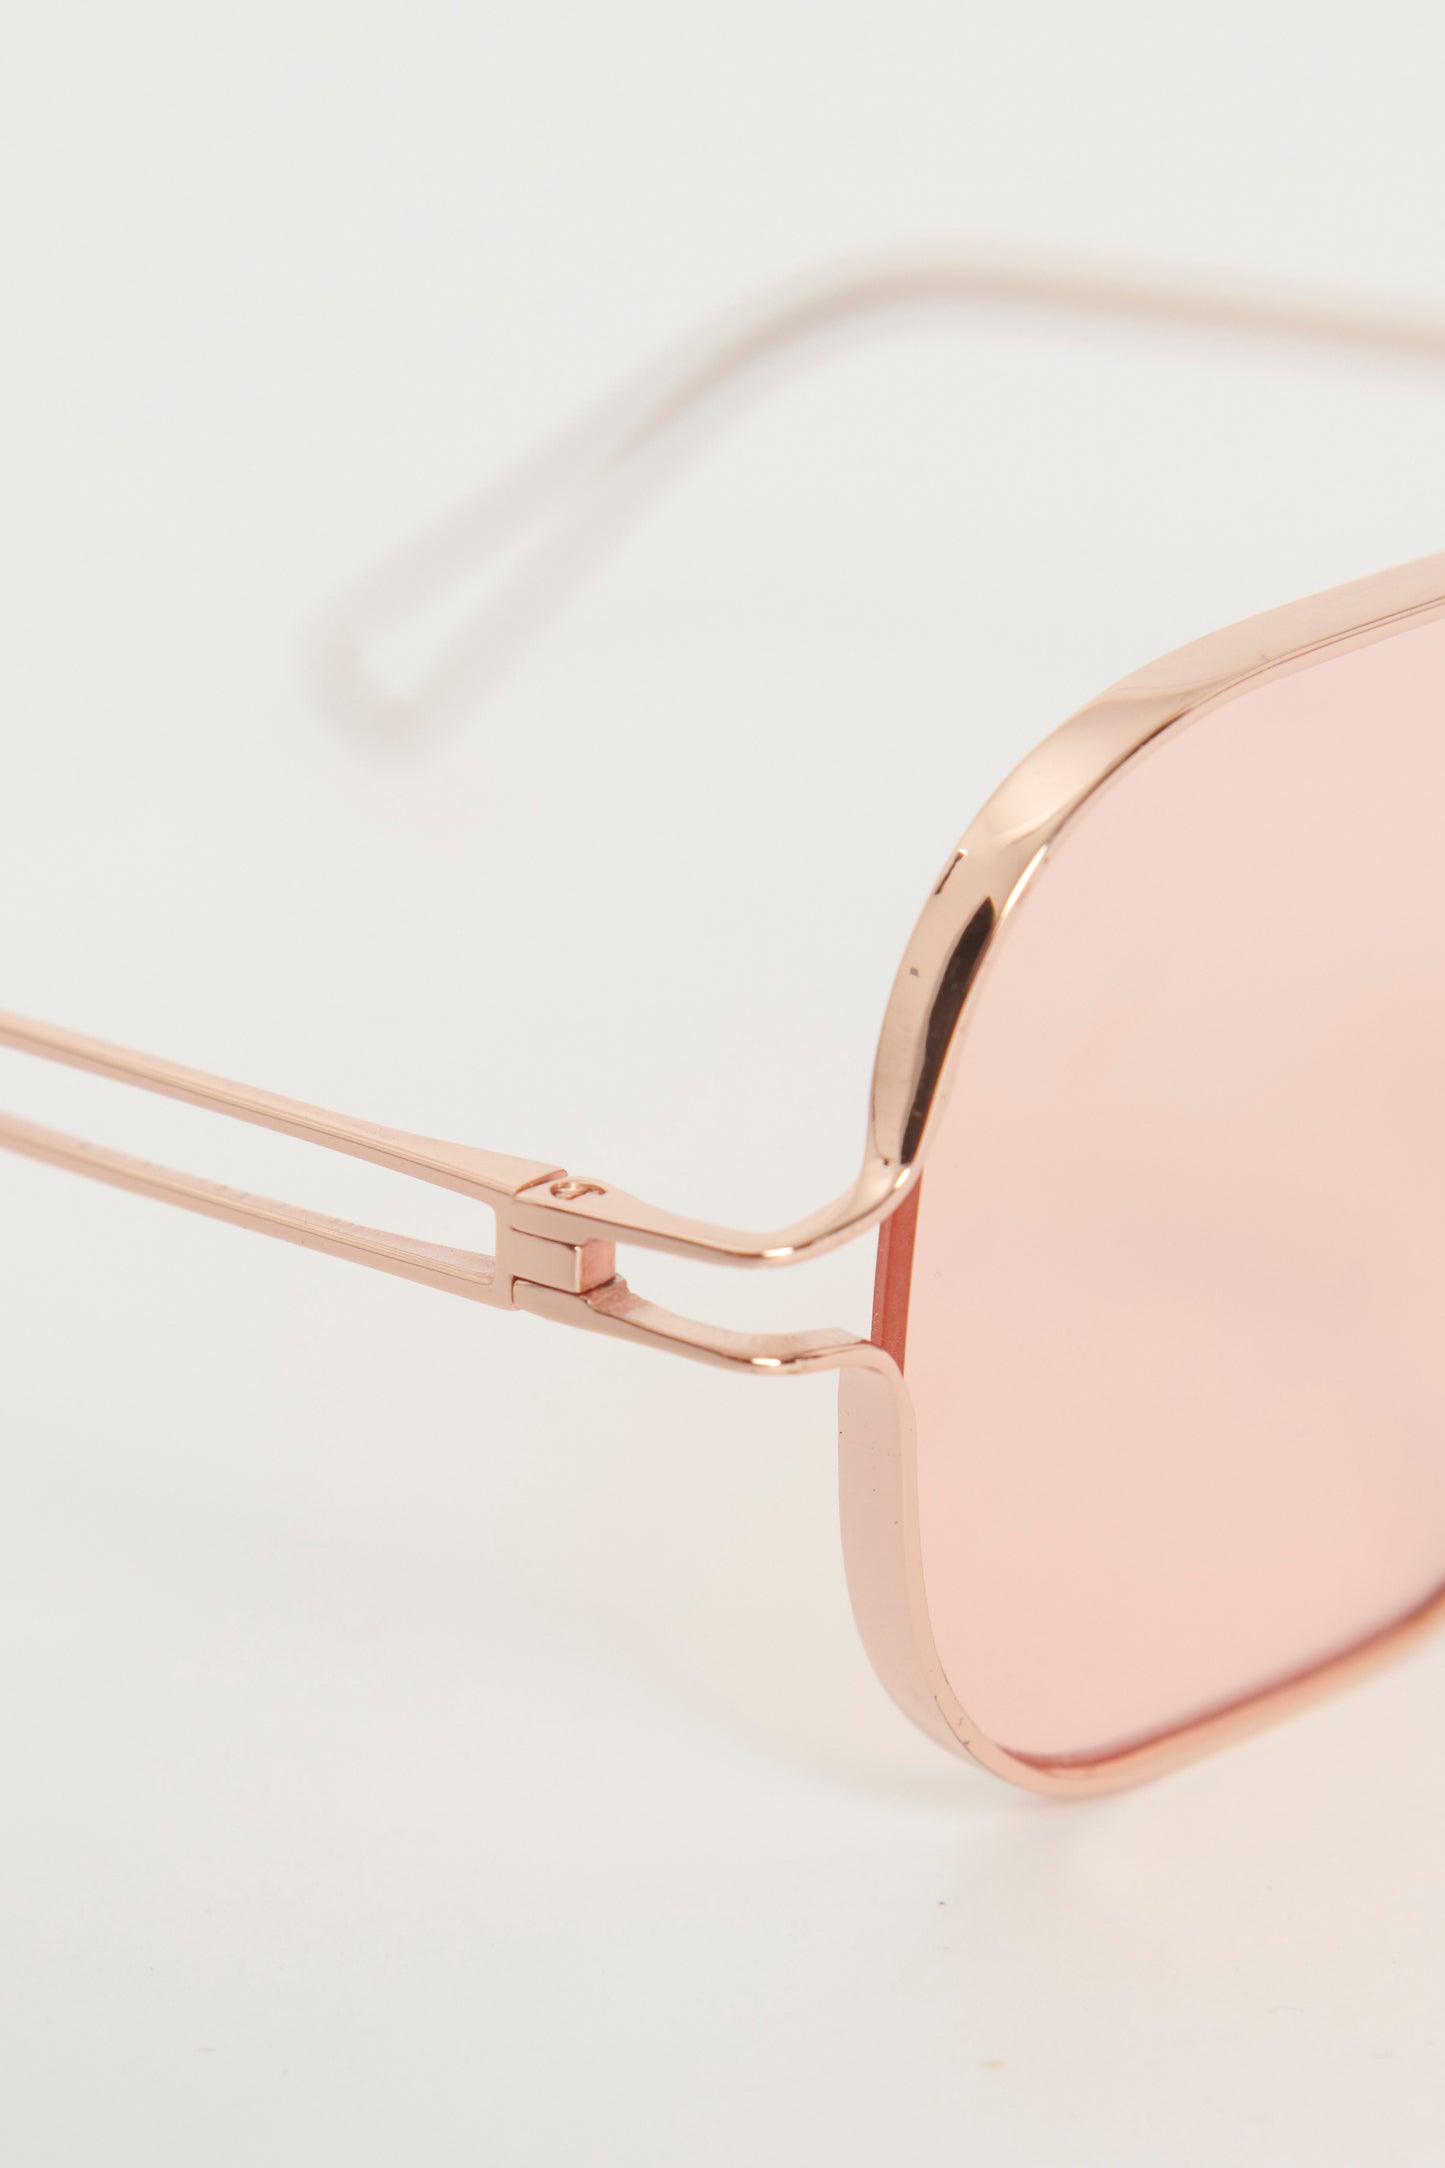 Rejina Pyo x Projekt Produkt Orange and Pink Tinted Aviator Sunglasses